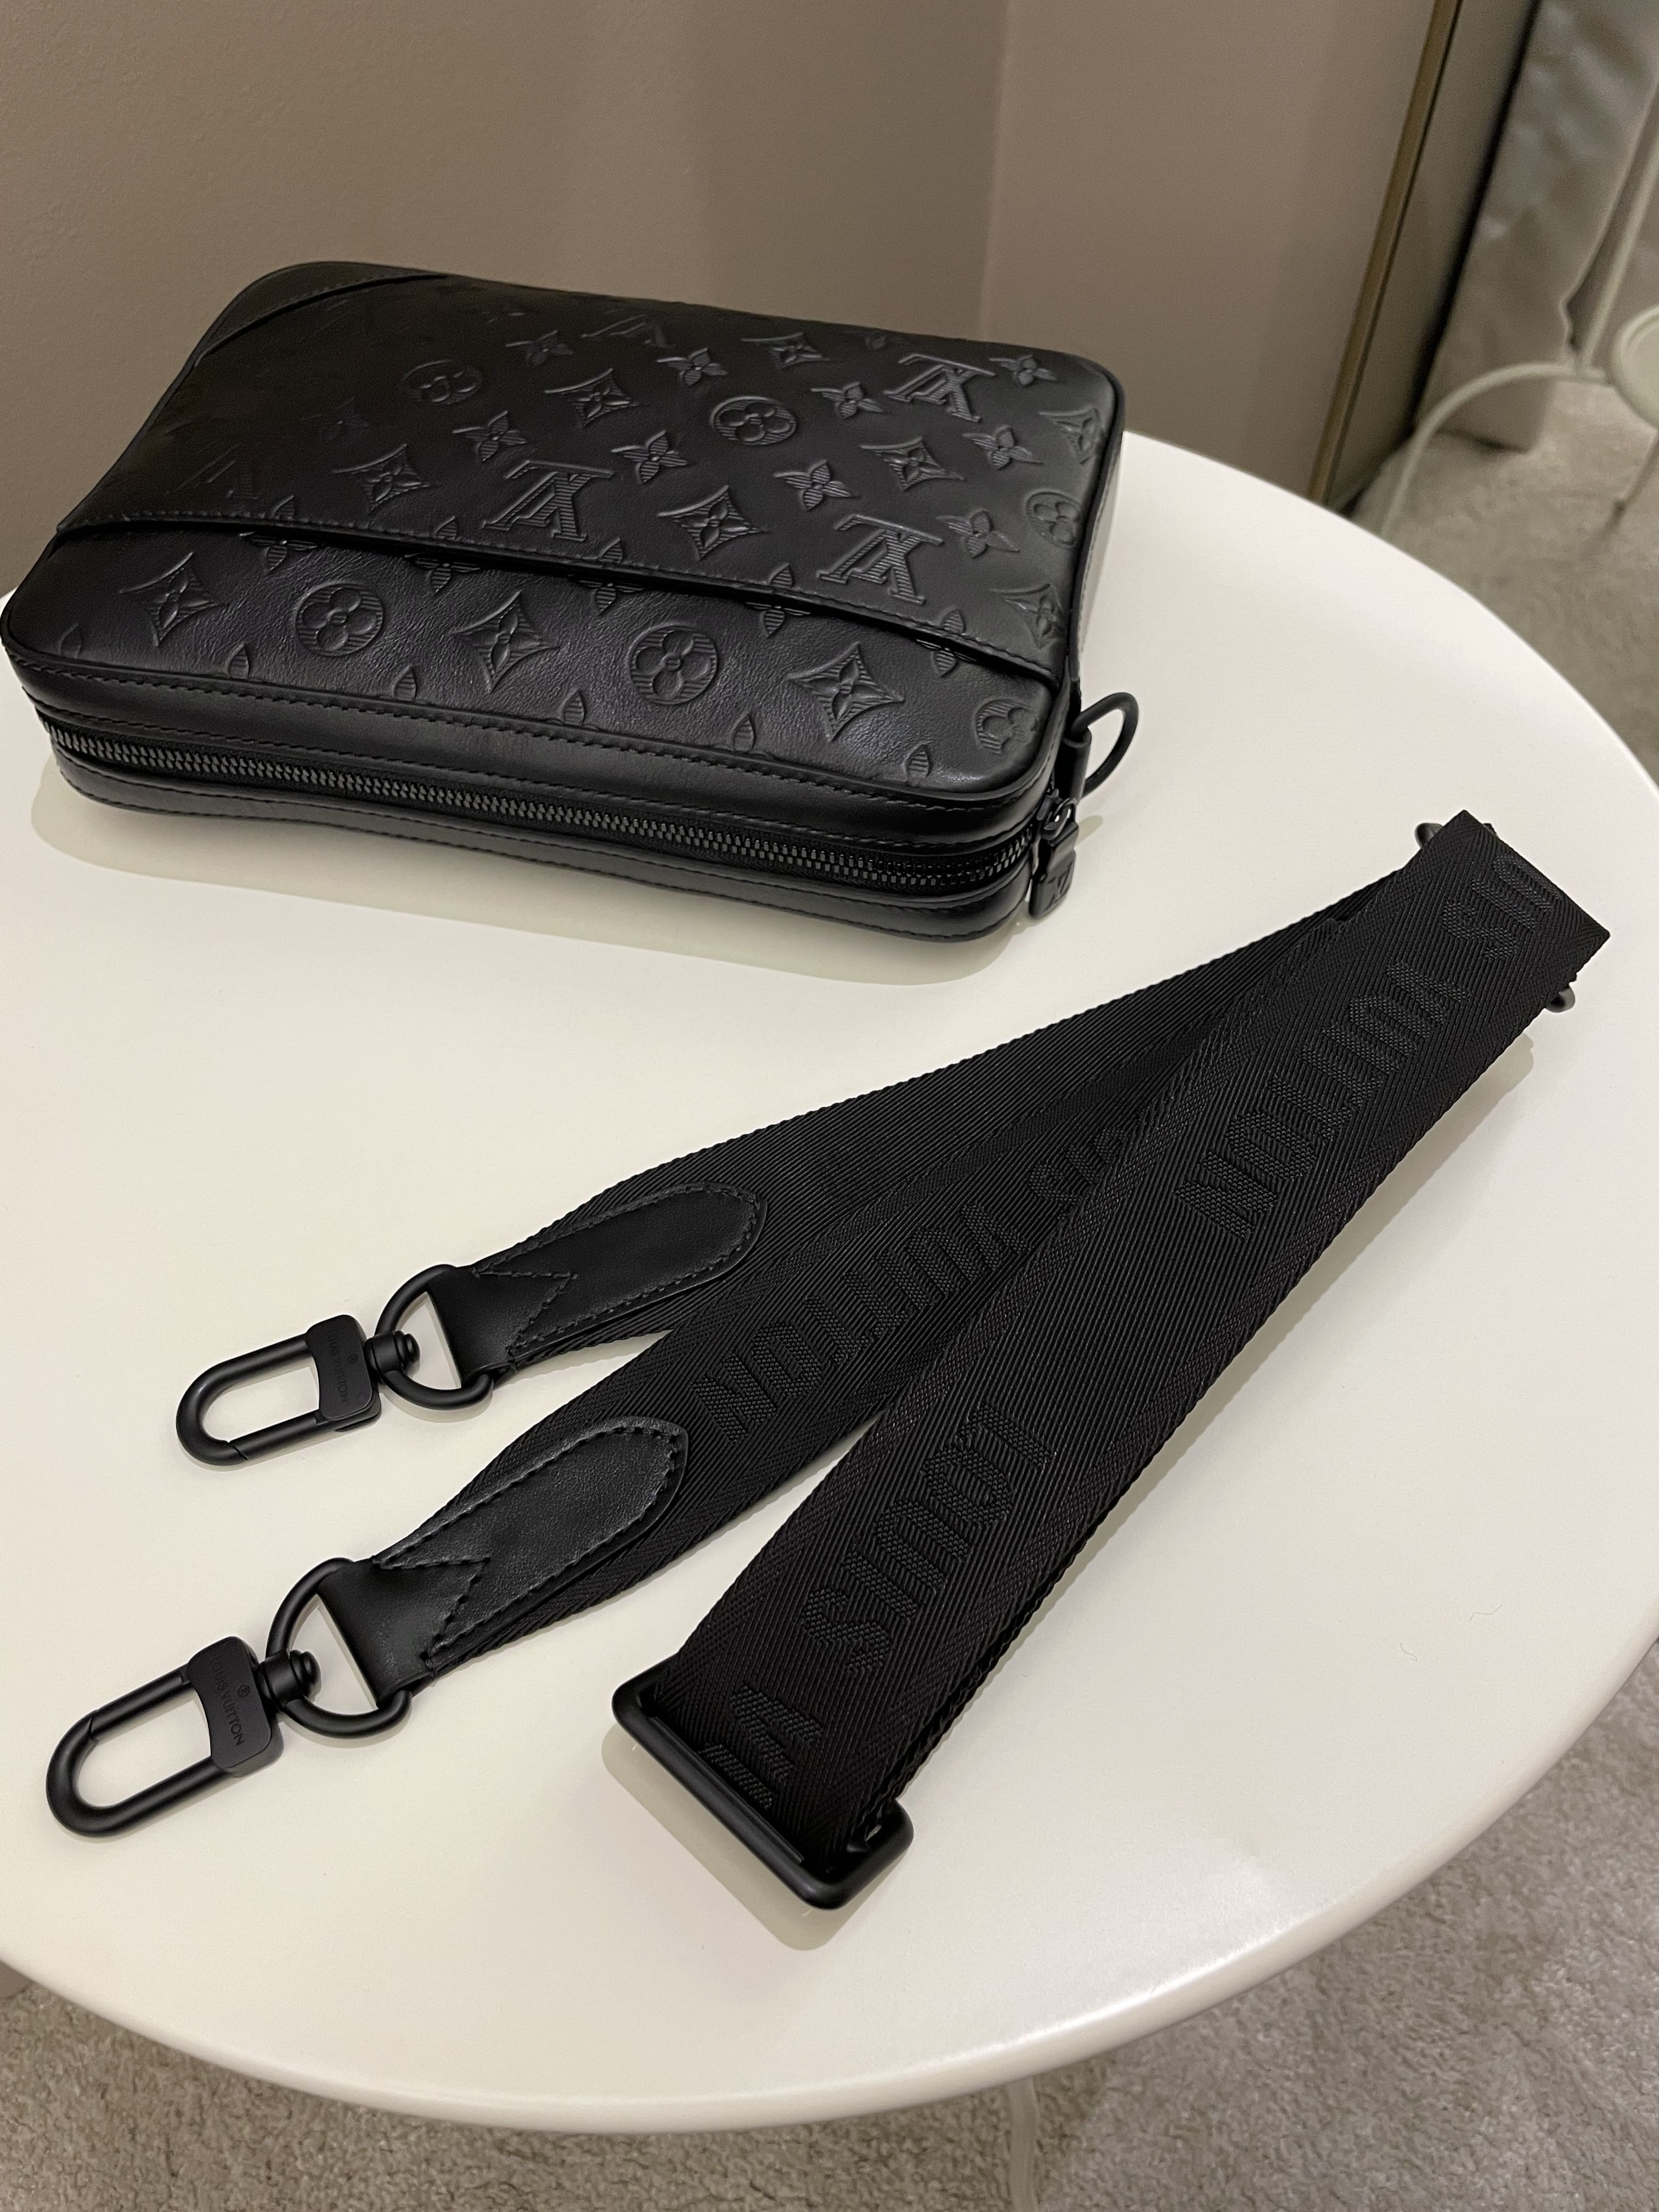 Louis Vuitton Duo Messenger Bag Black